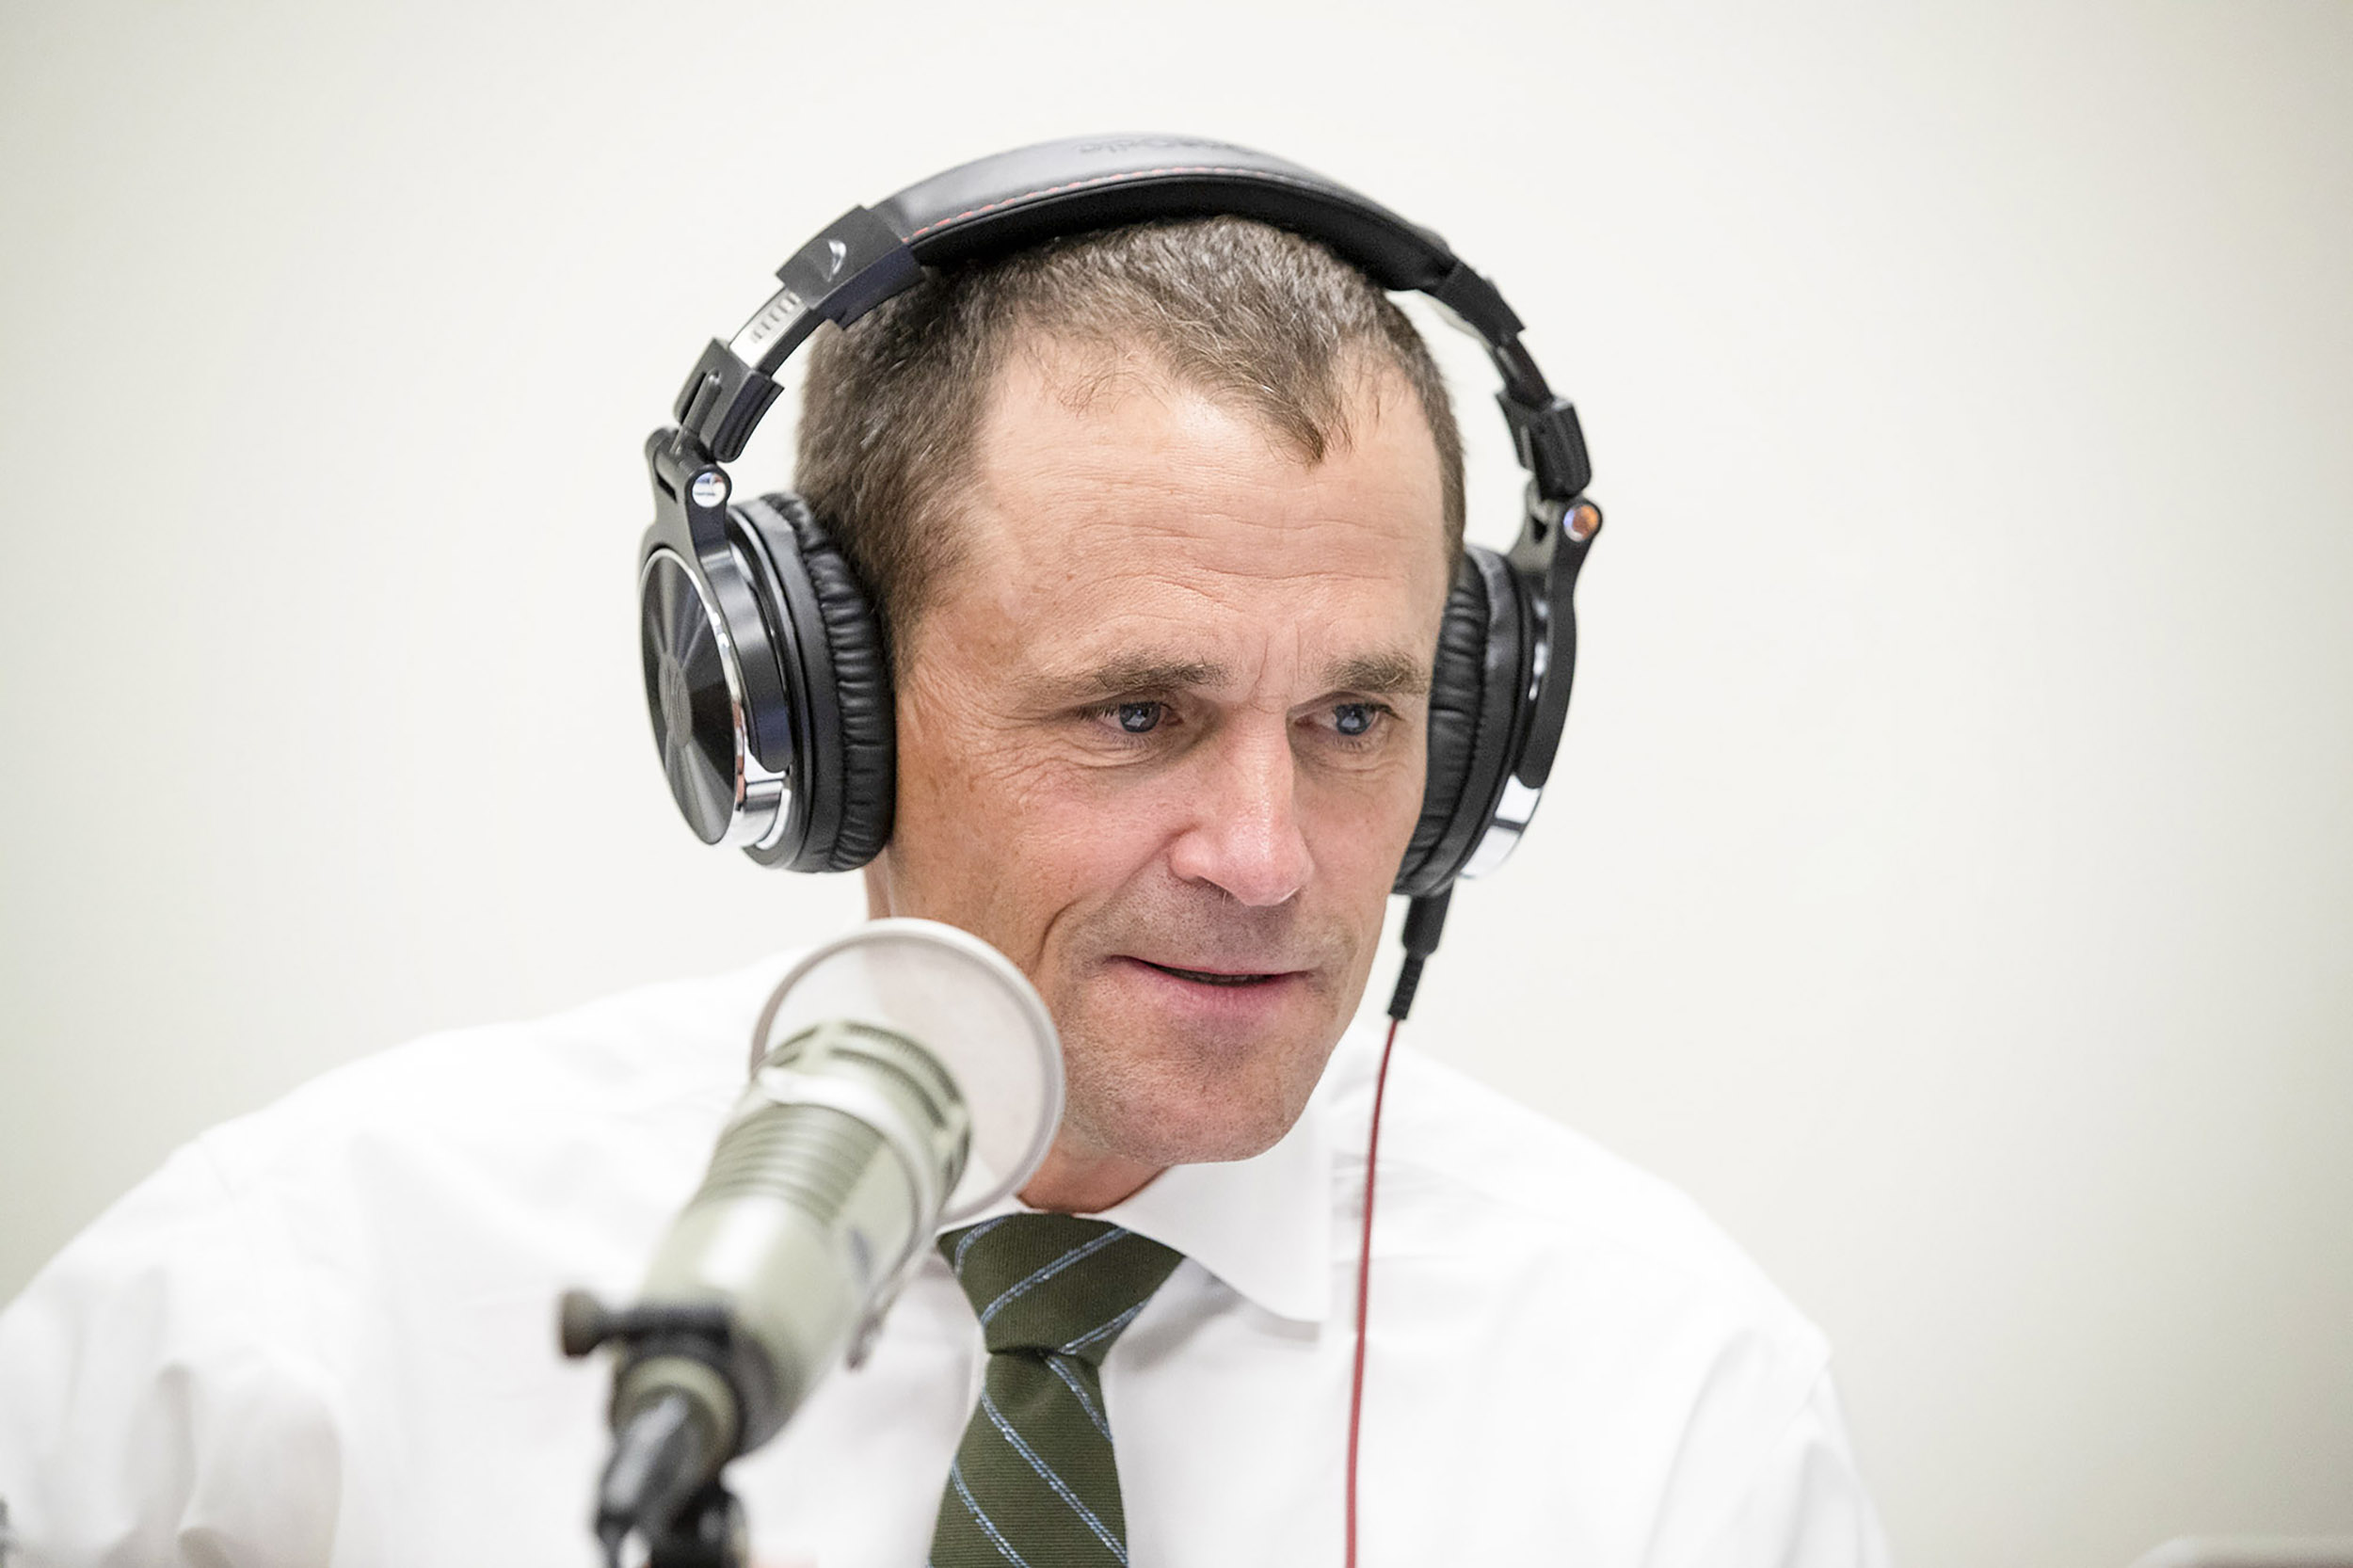 University of Virginia President Jim Ryan wearing headphones and talking into a microphone